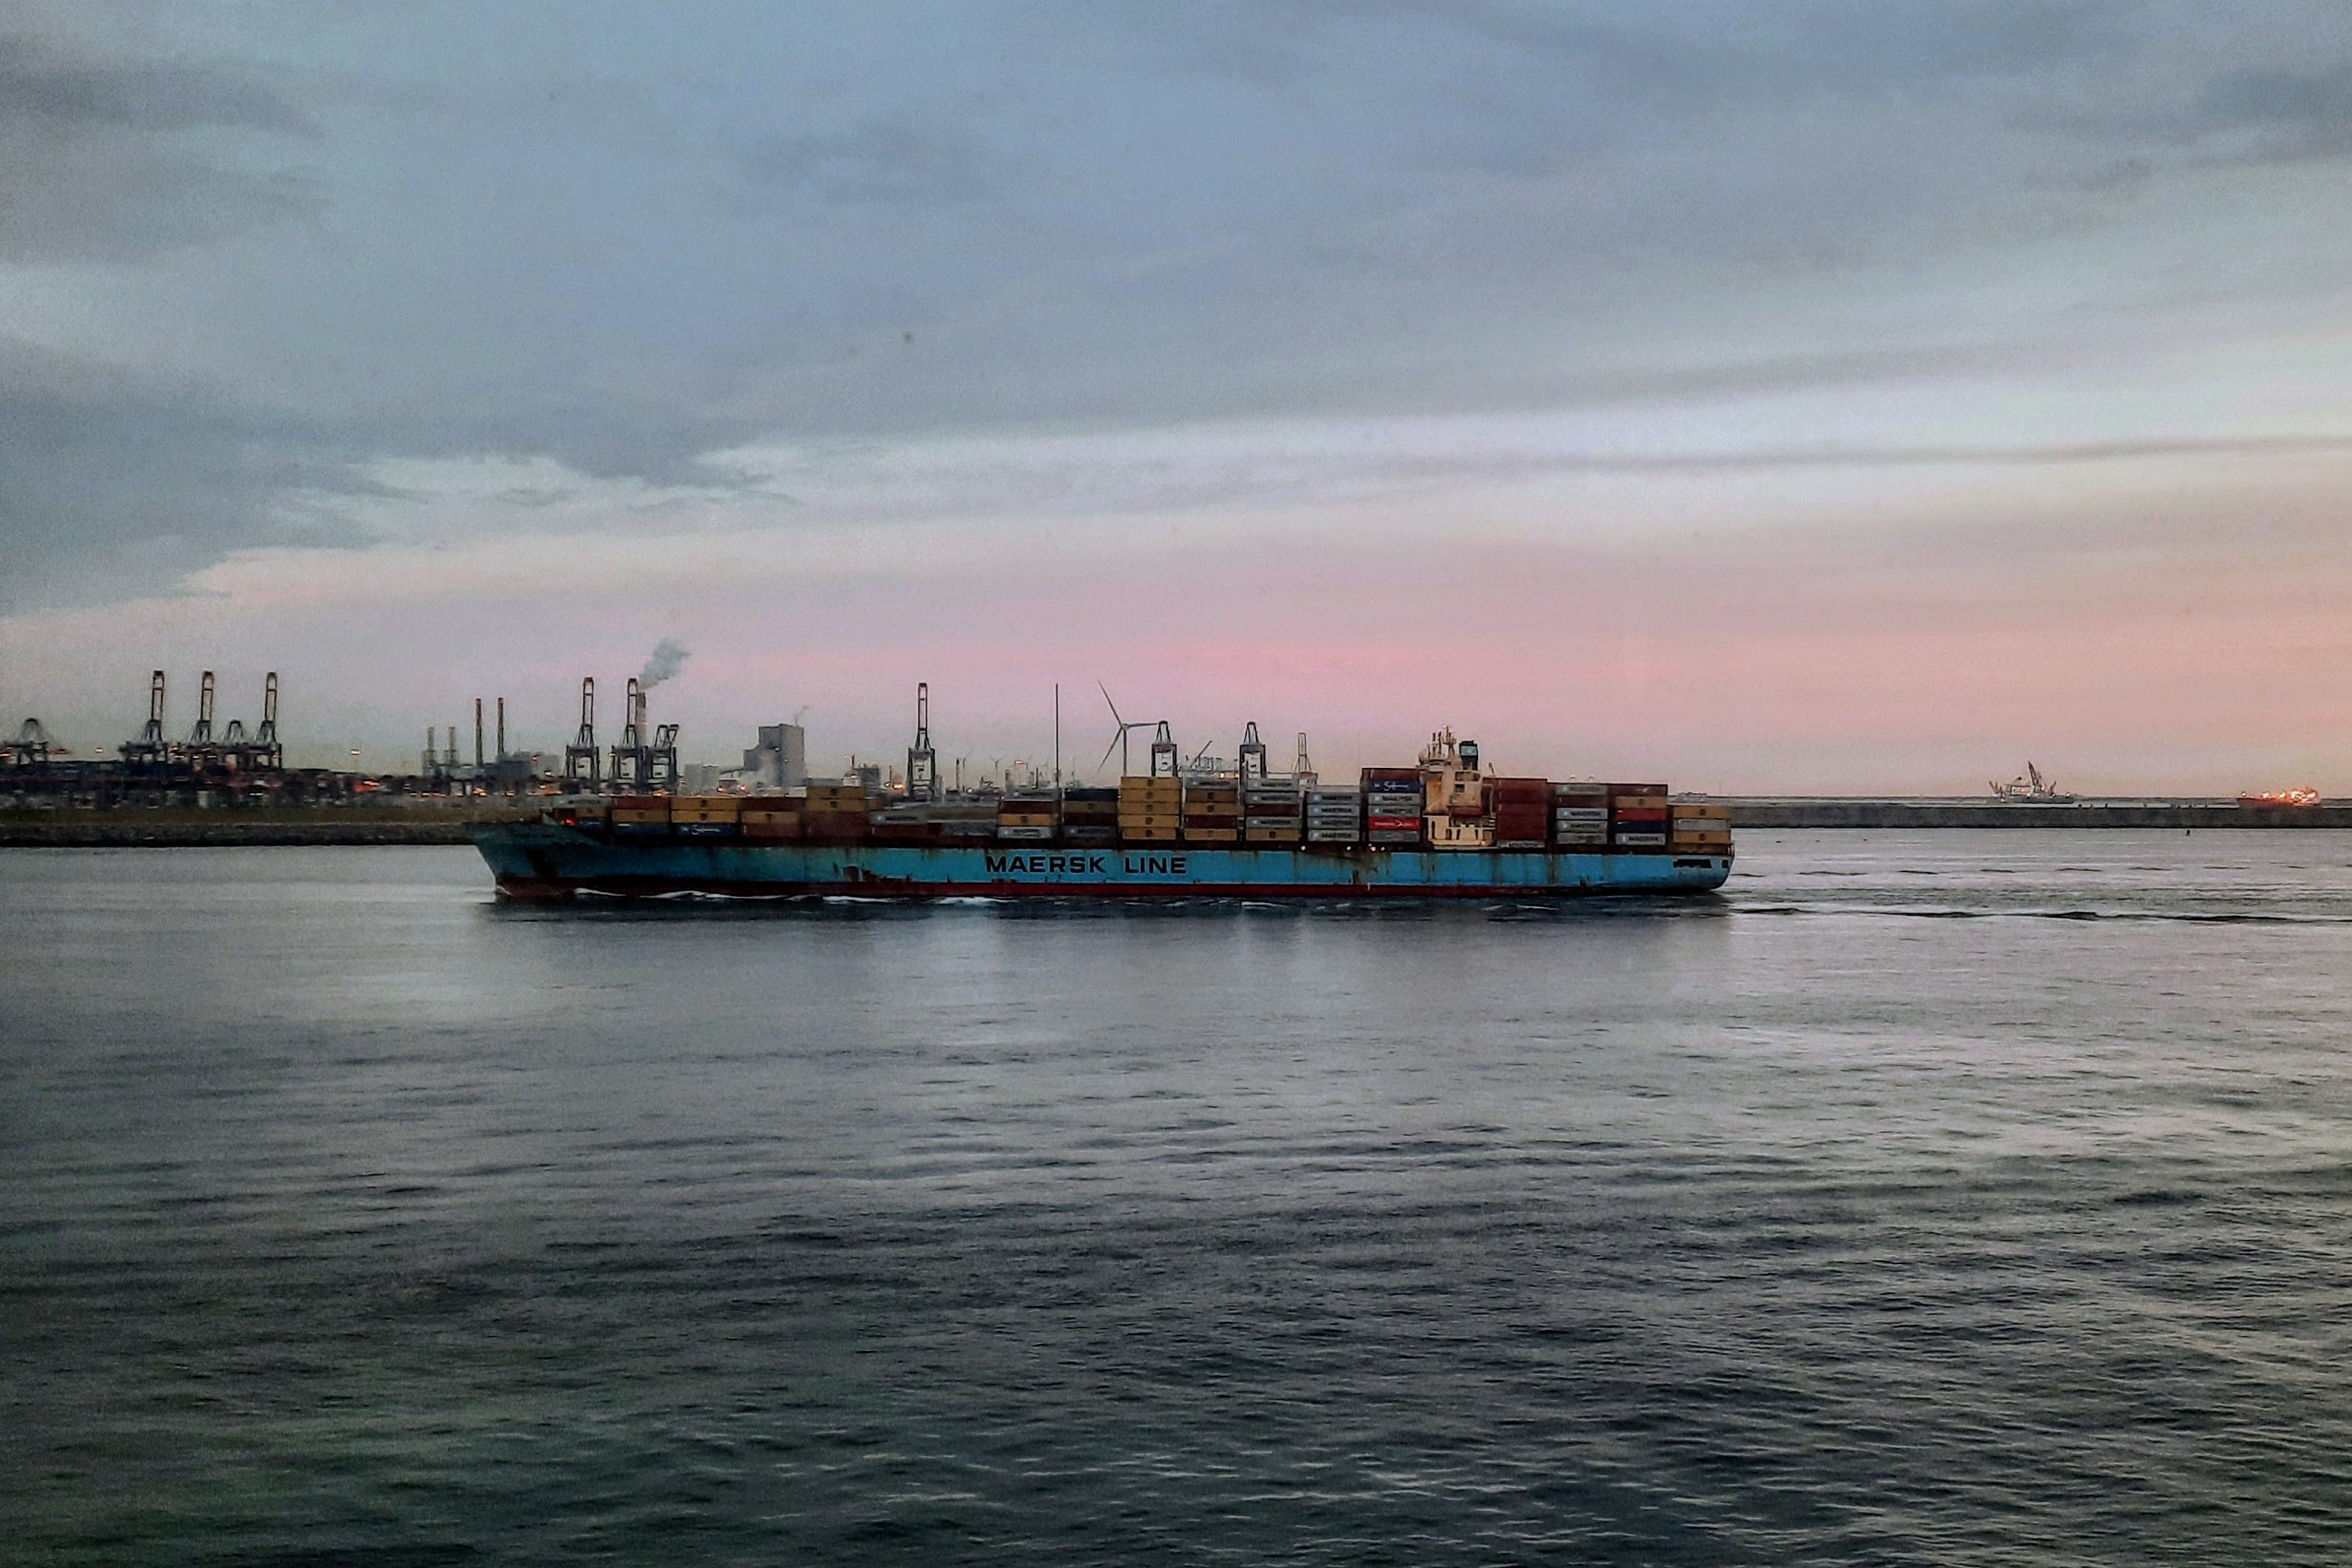 Maersk ship in Rotterdam